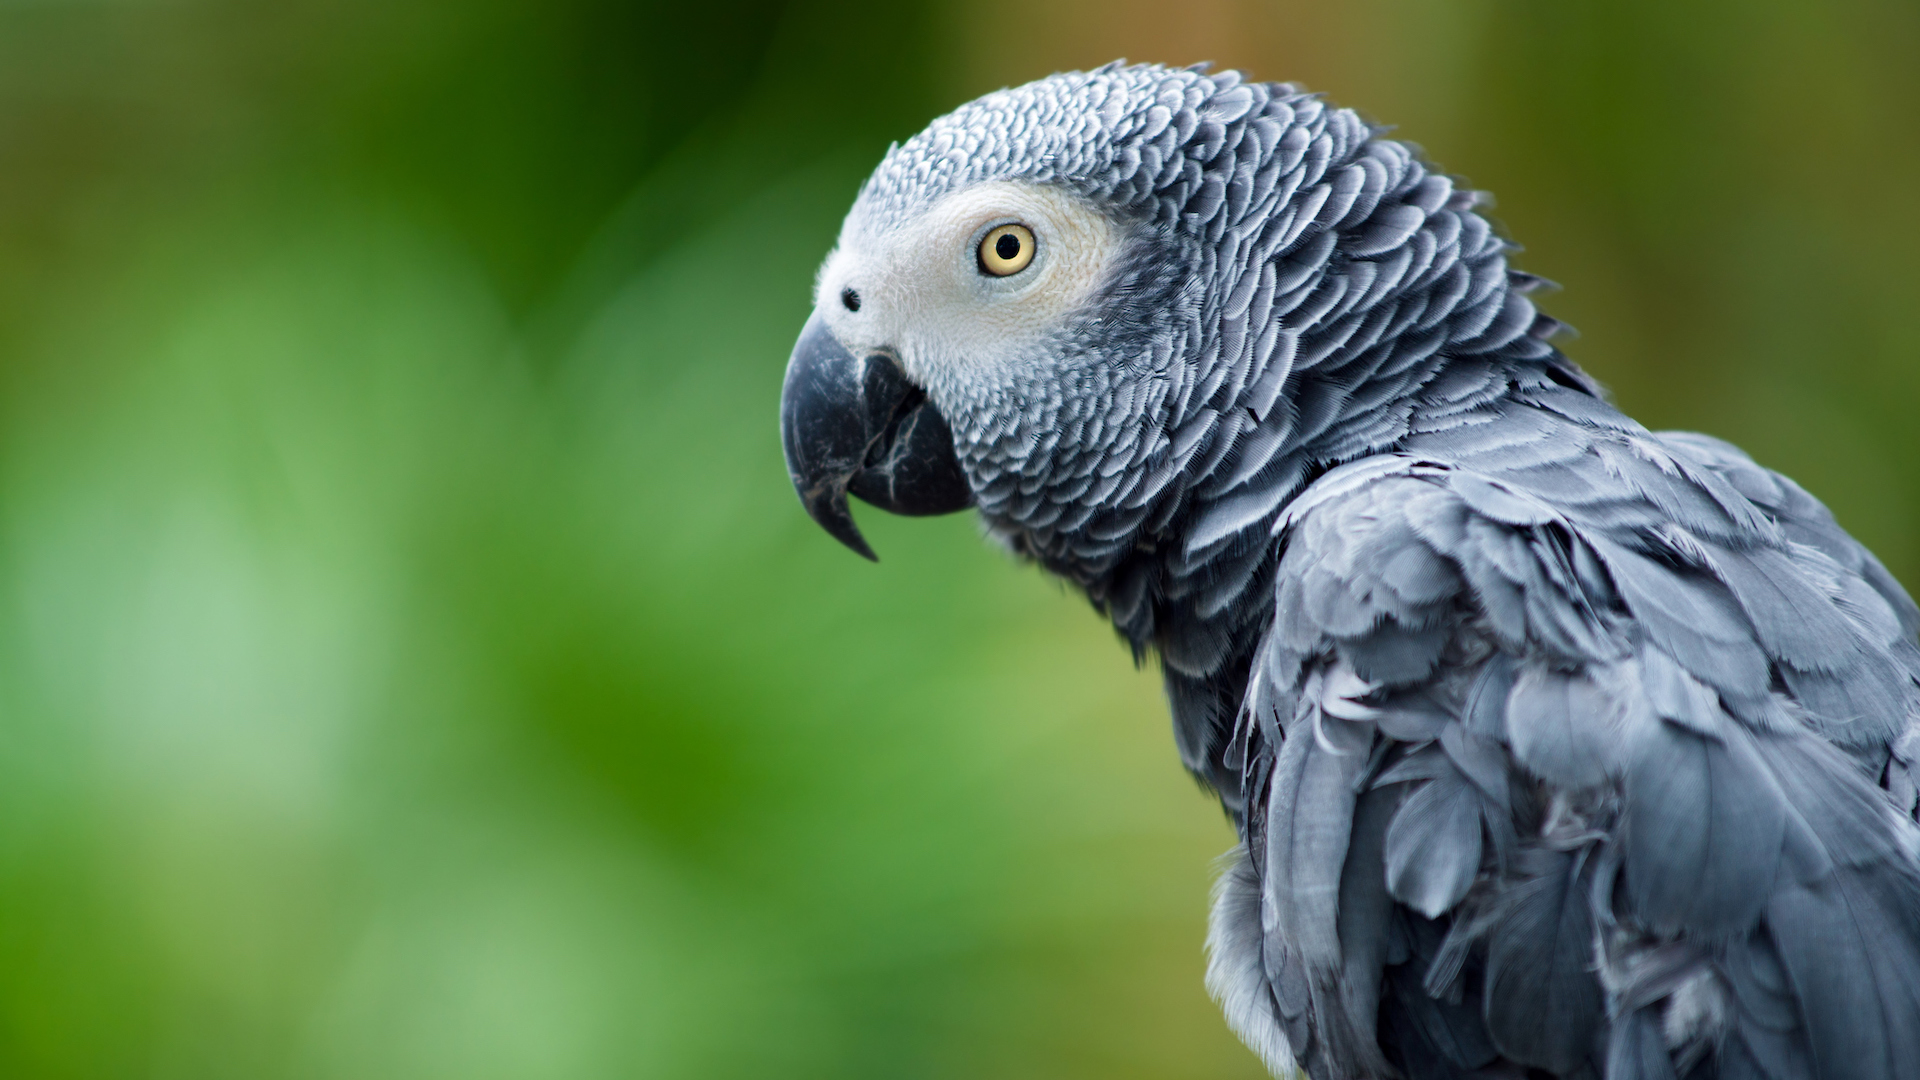 A photograph of an African Gray parrot